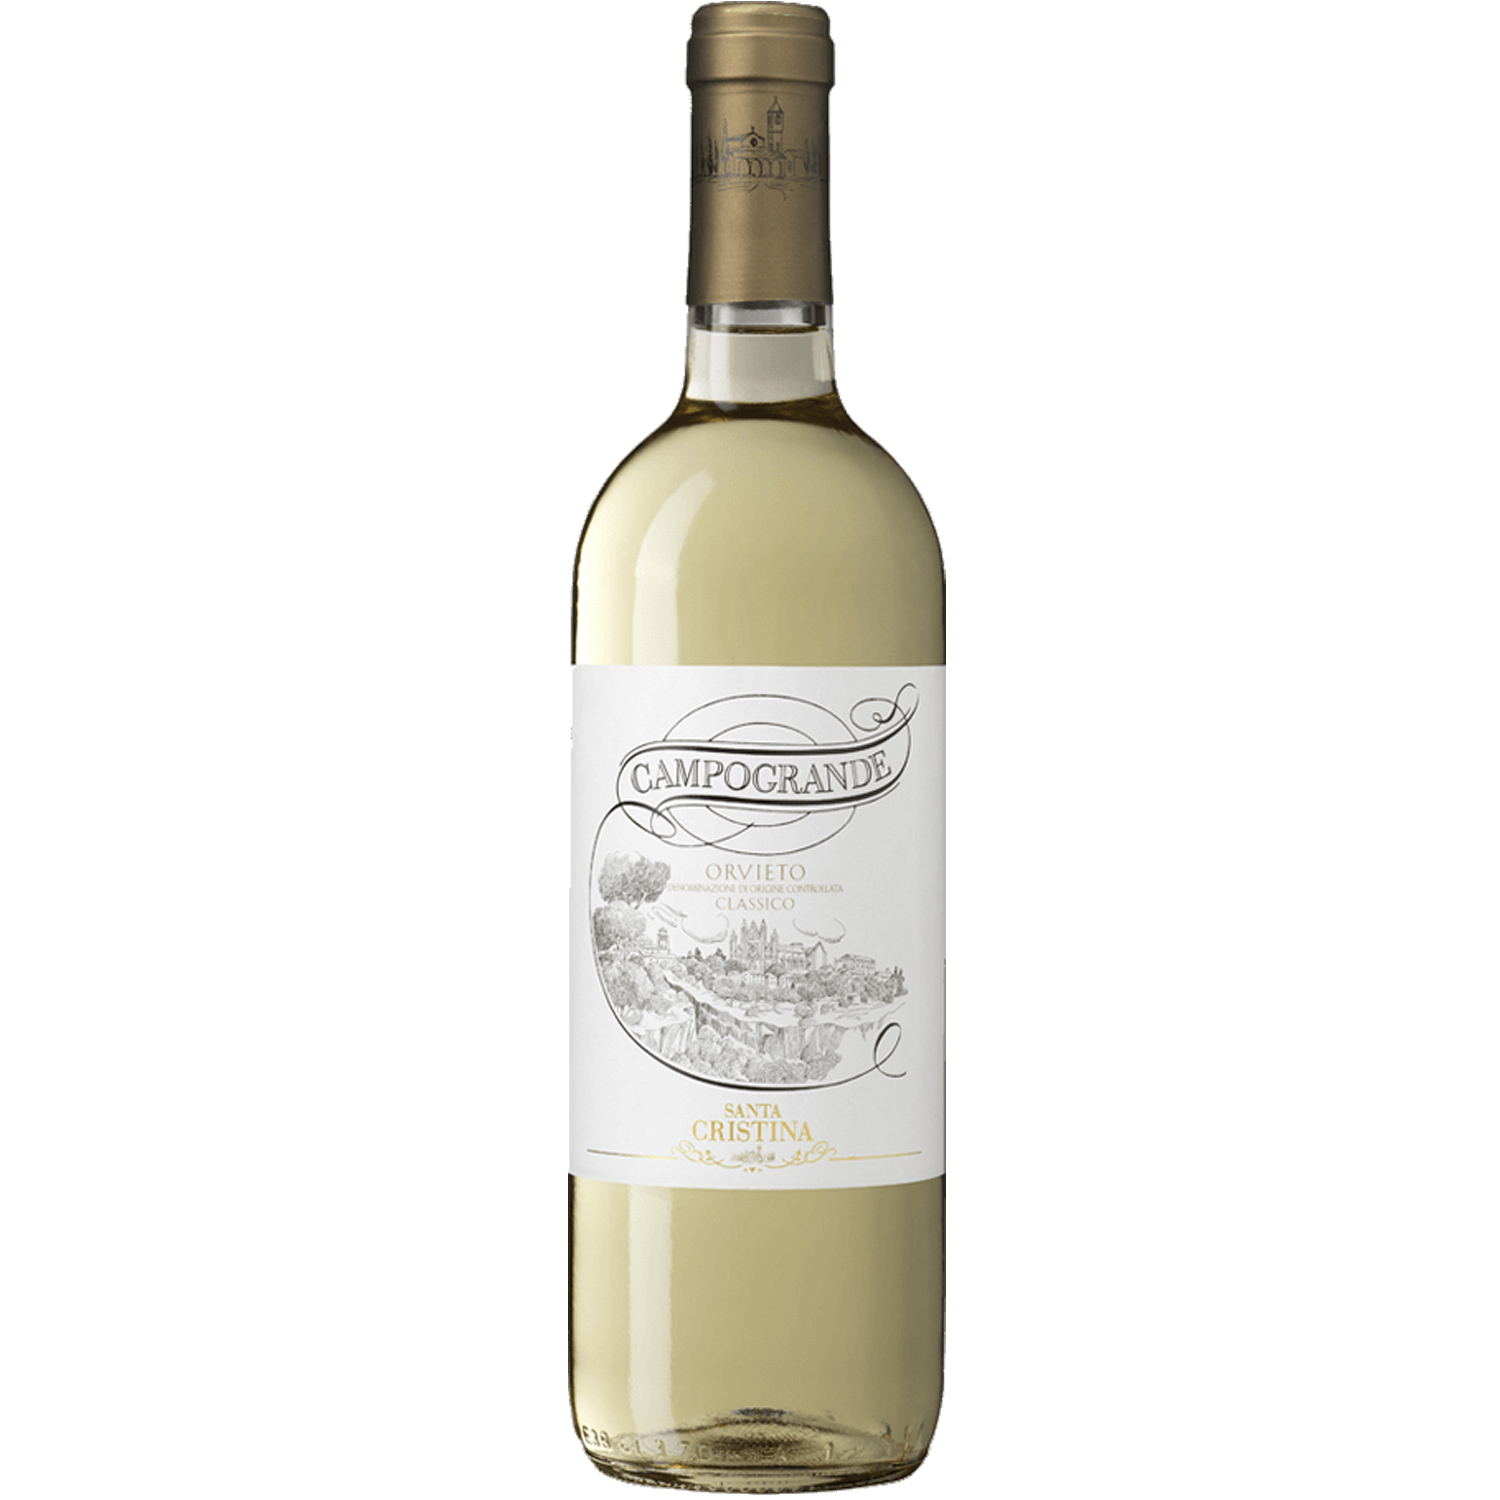 Italienischer Weißwein Santa Cristina Campogrande Orvieto Classico 2020